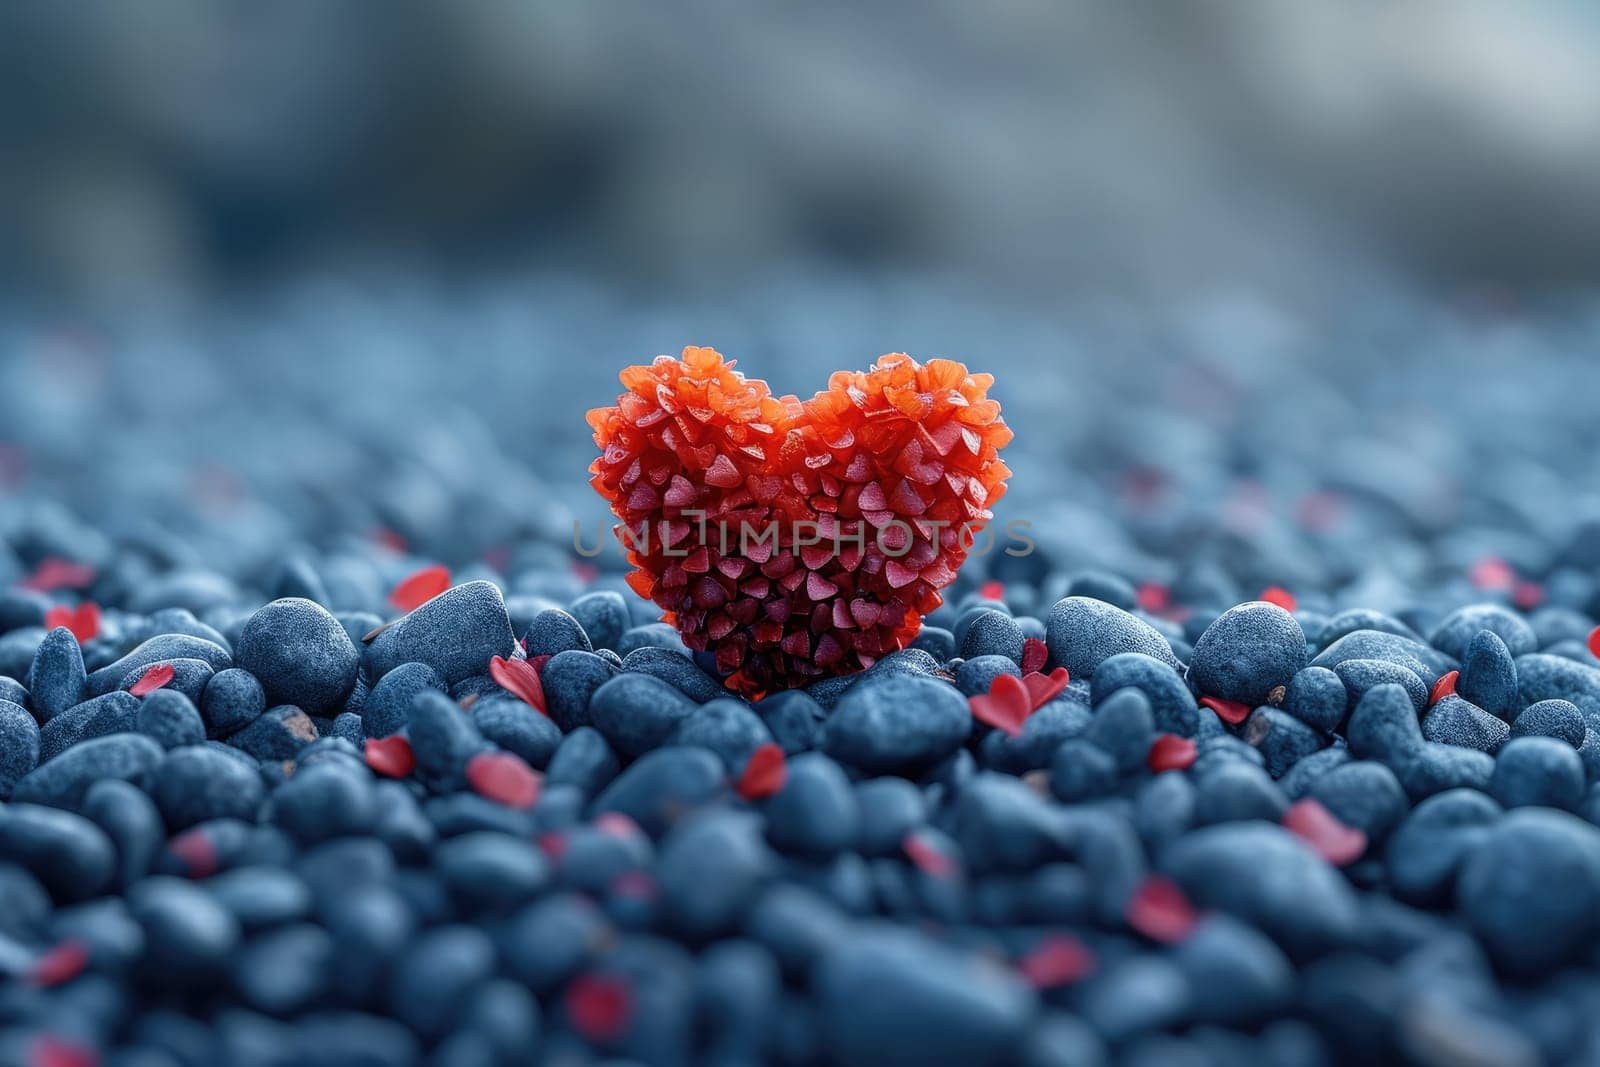 A healthy heart of love pragma by biancoblue